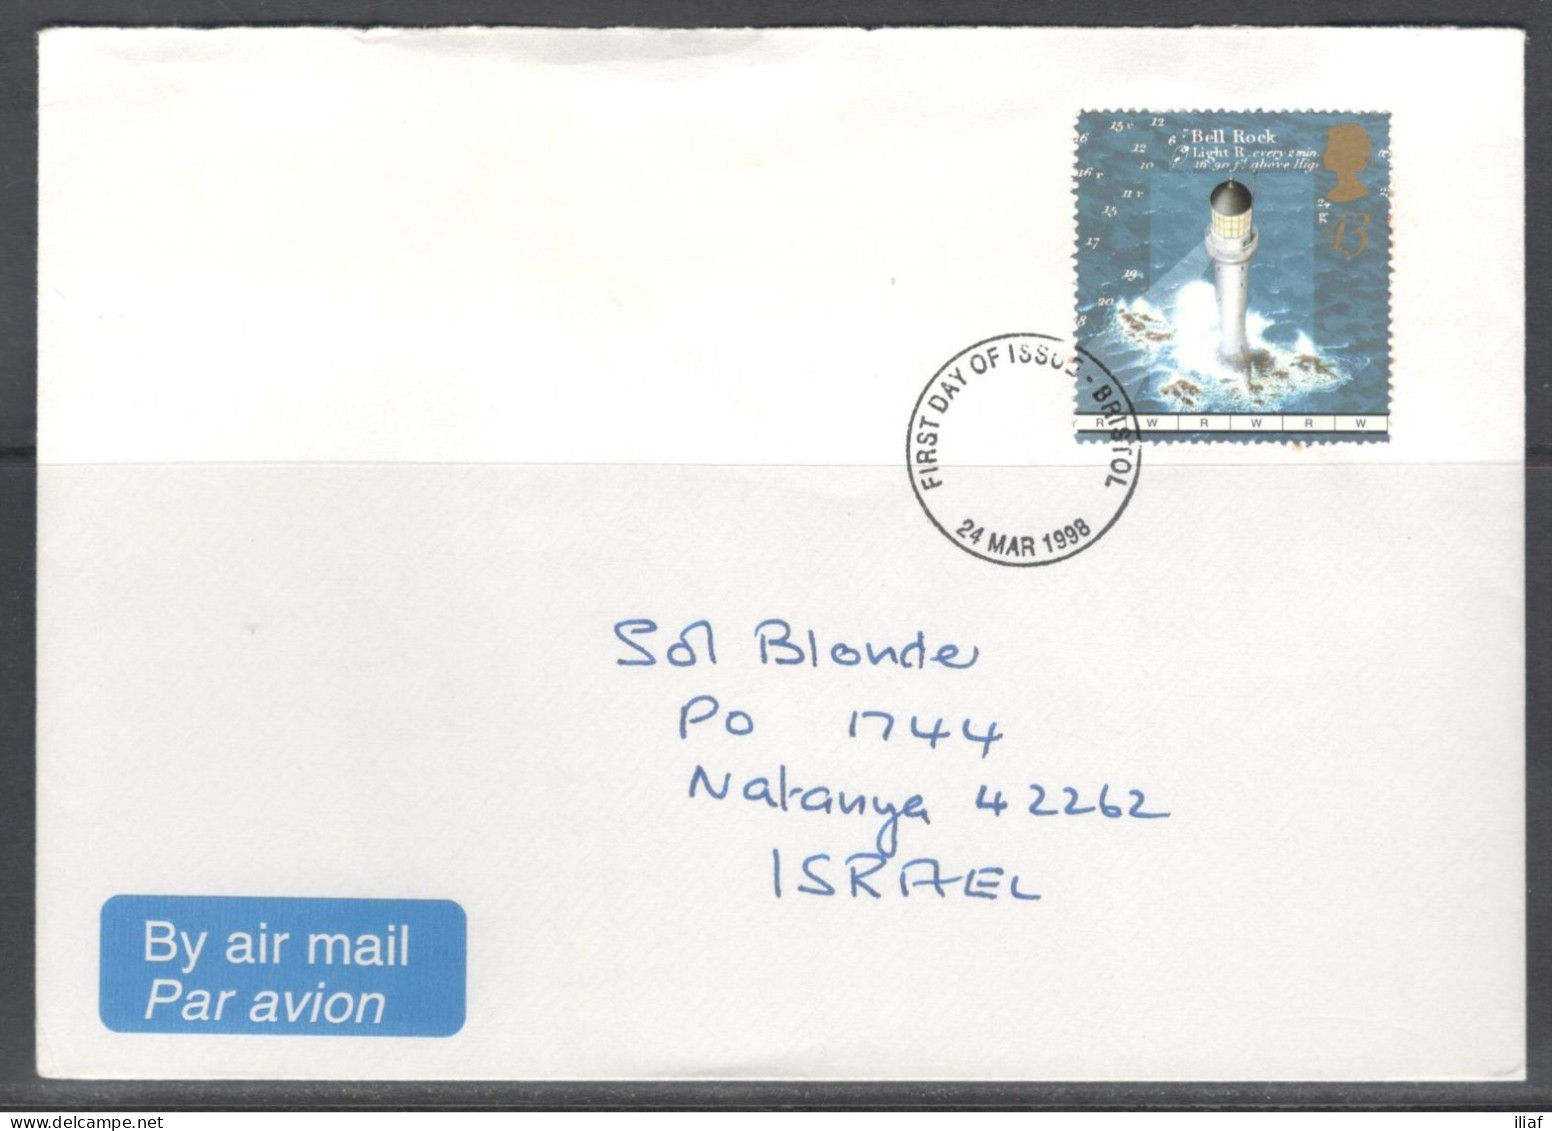 United Kingdom Of Great Britain.  FDC Sc. 1807.  Lighthouses.  FDC Cancellation On Plain Envelope - 1991-00 Ediciones Decimales